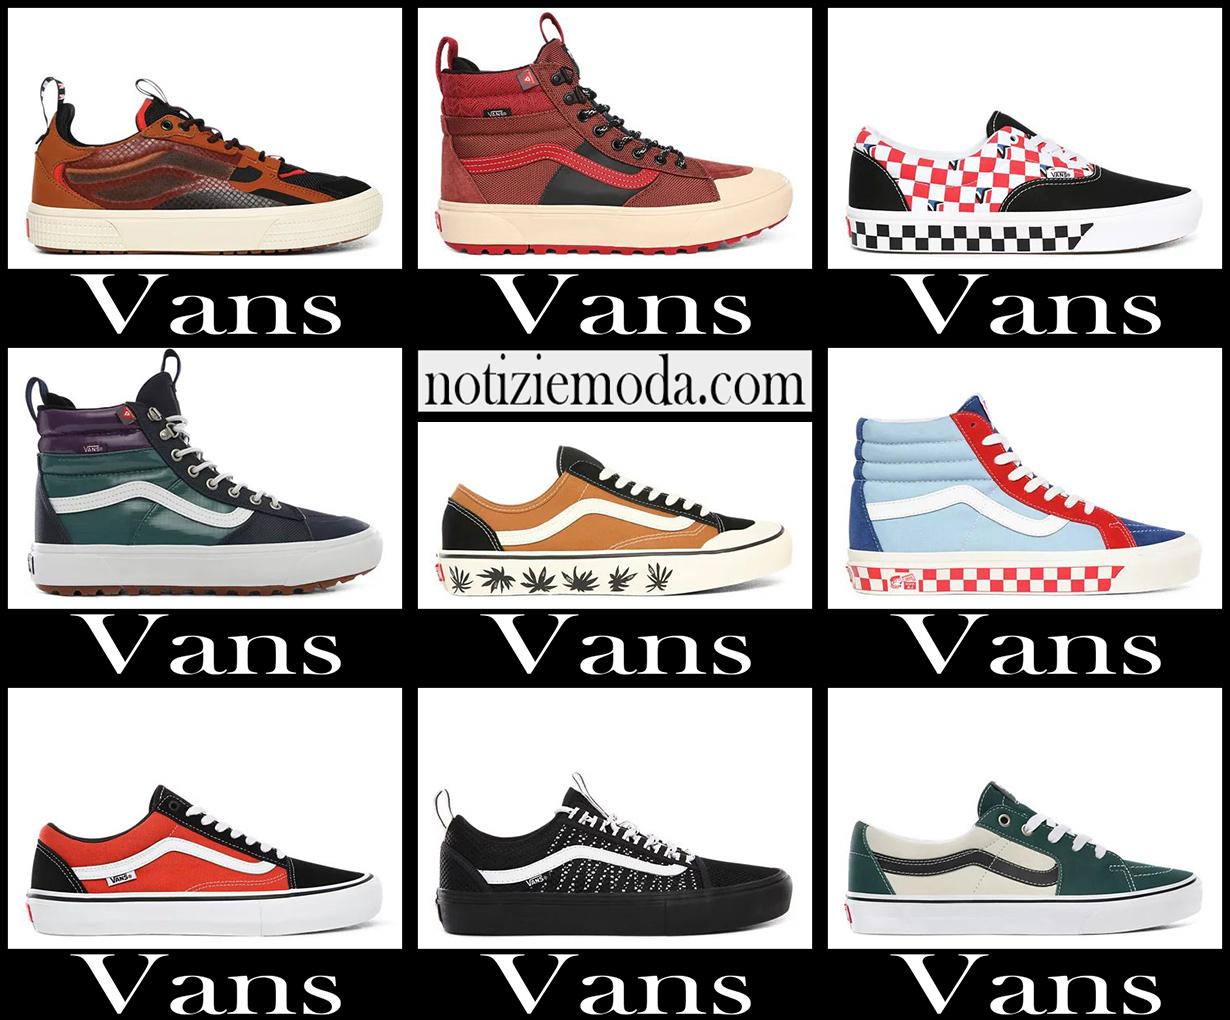 Nuovi arrivi sneakers Vans 2021 calzature moda uomo لون ترابي